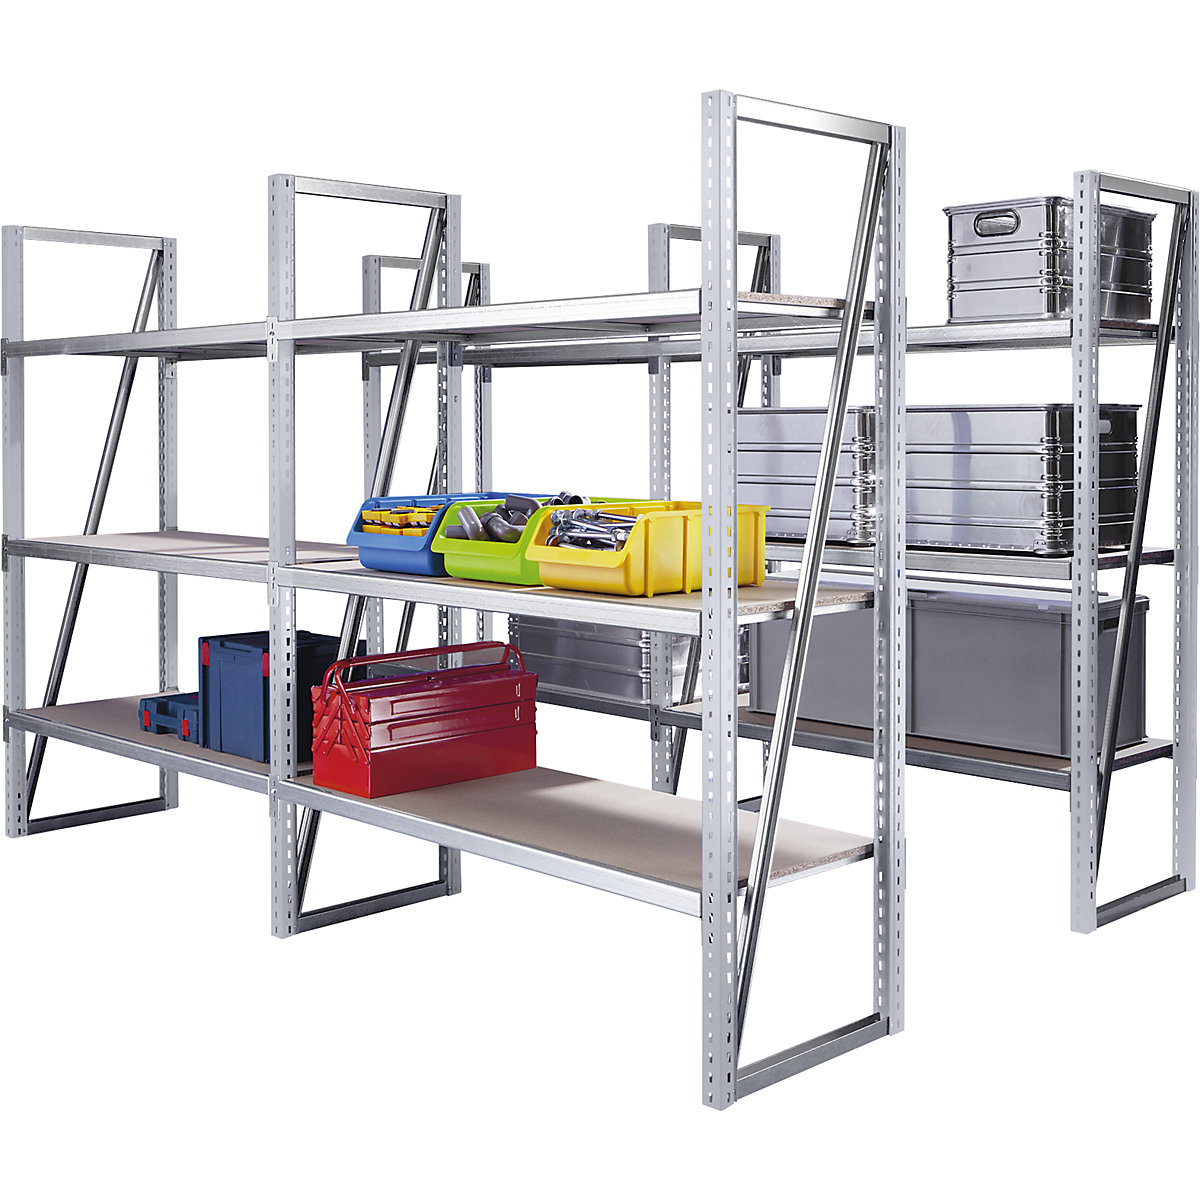 Wide span boltless shelf unit, shelf width 1500 mm – eurokraft pro, shelf unit height 1990 mm, shelf depth 600 mm, standard shelf unit, RAL 7035